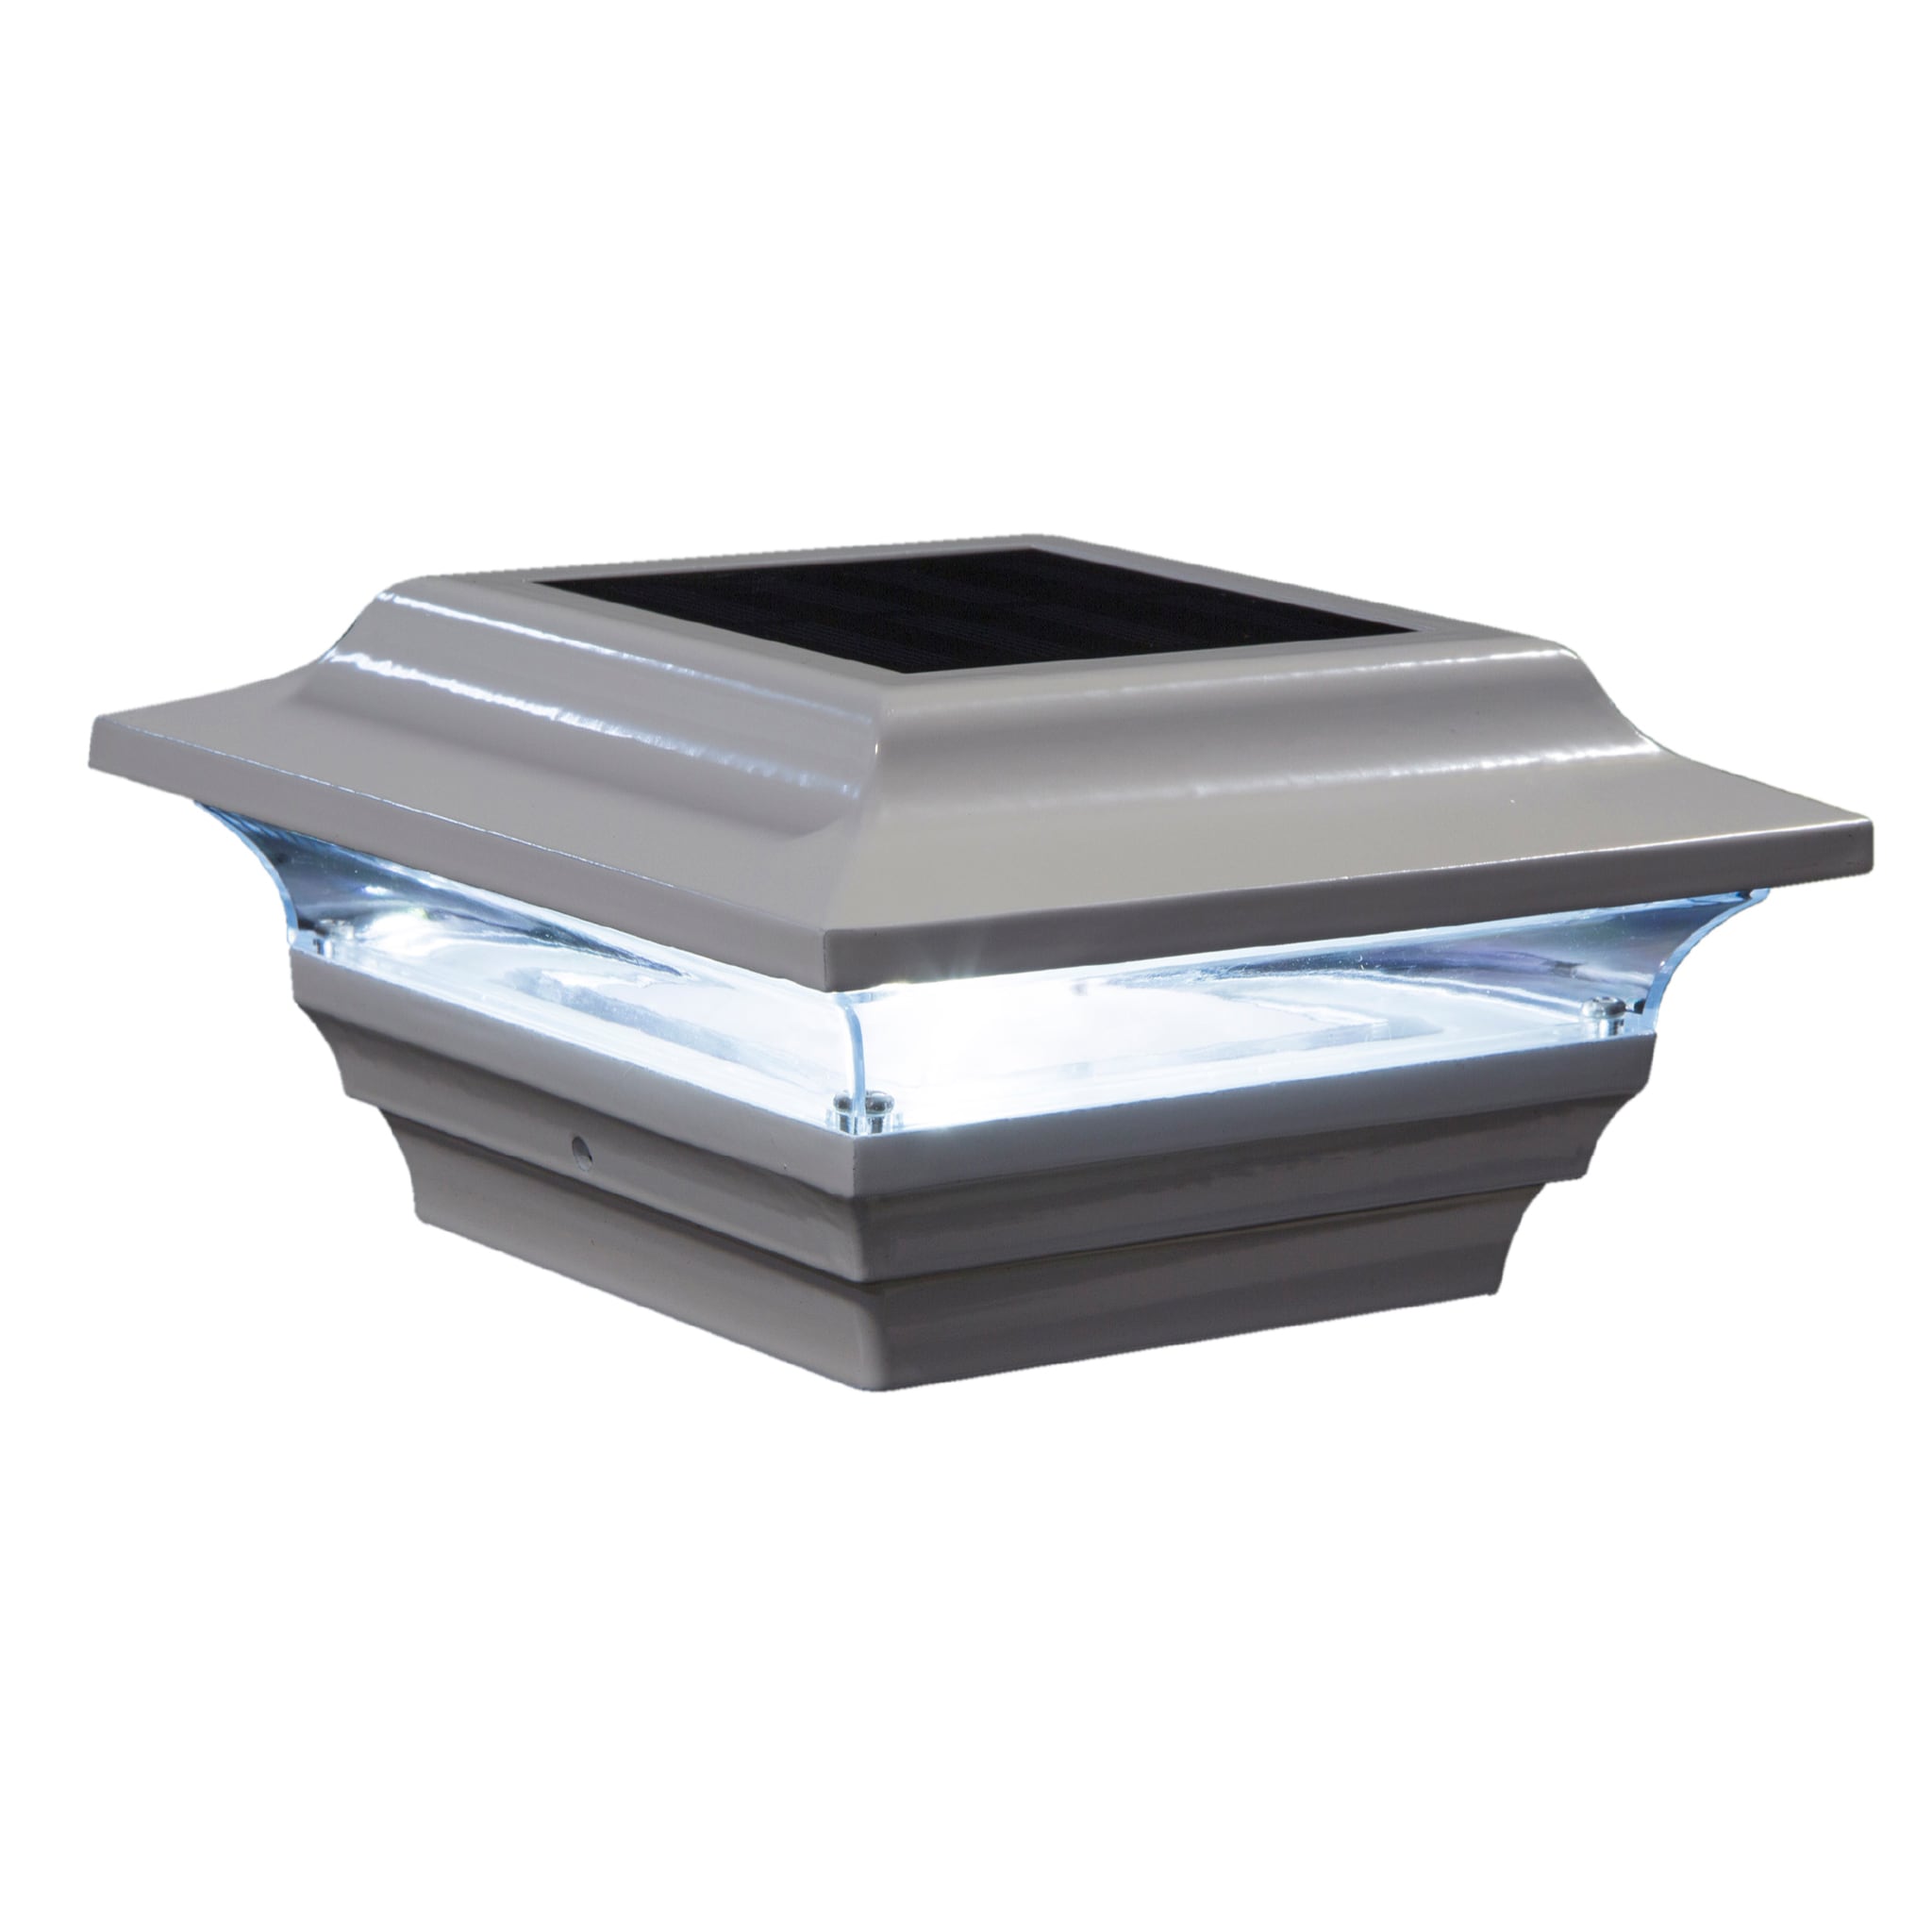 Classy Caps 4-in x 4-in 15-Lumen 1-Watt White Solar LED Outdoor Post Light  (4500 K) in the Deck Lights department at